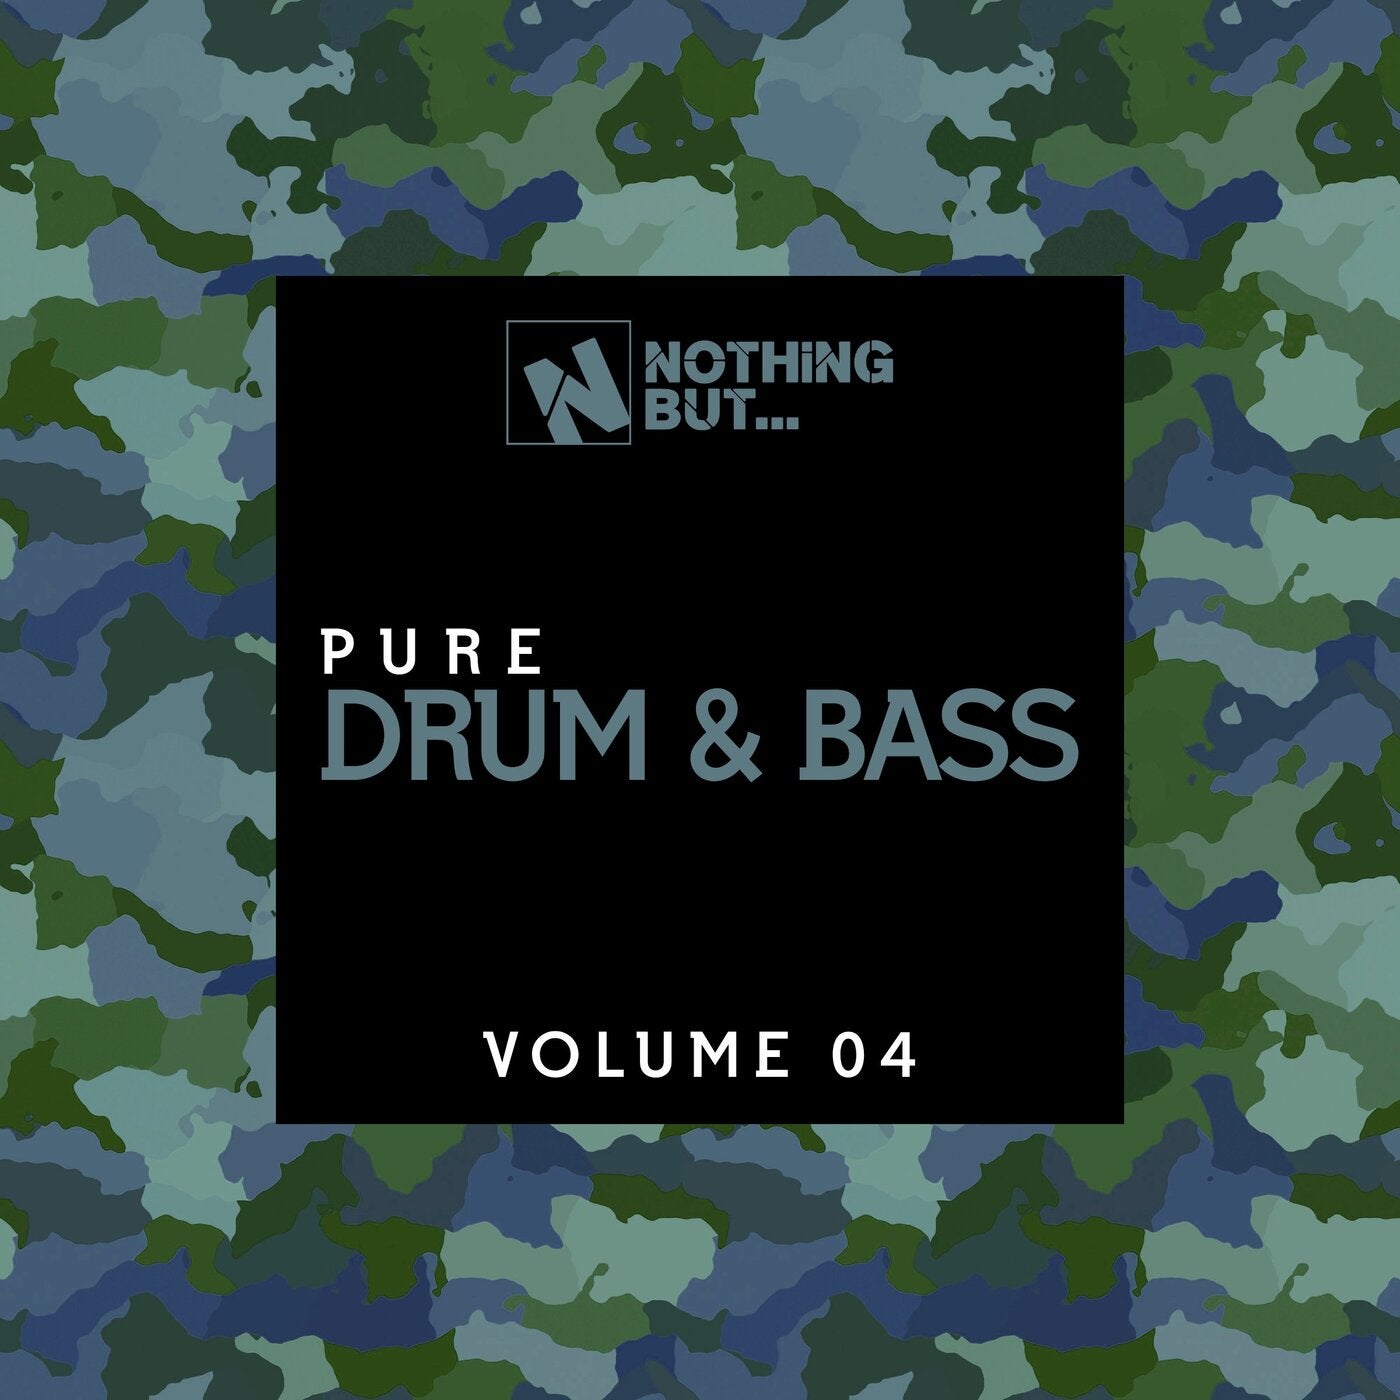 Download VA - Nothing But... Pure Drum & Bass, Vol. 04 [NBPDNB04] mp3